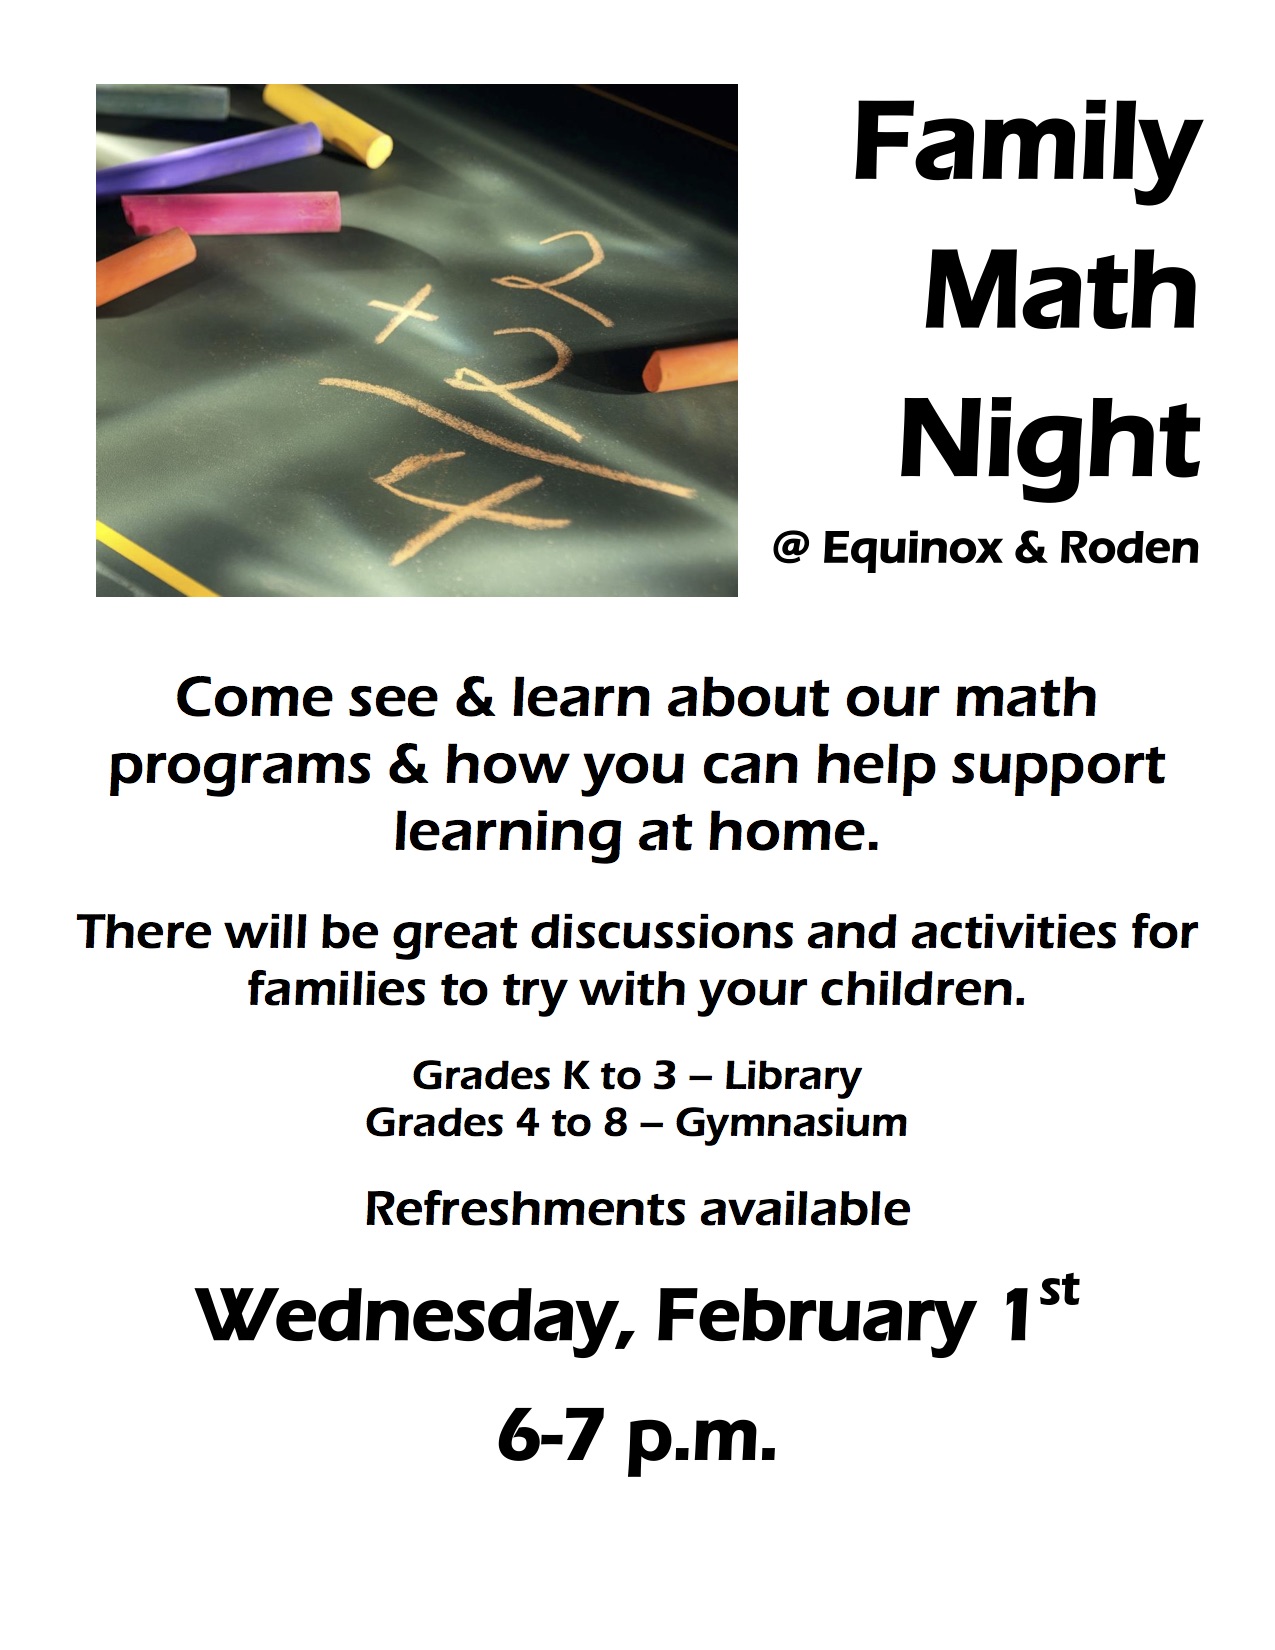 Family Math Night Poster